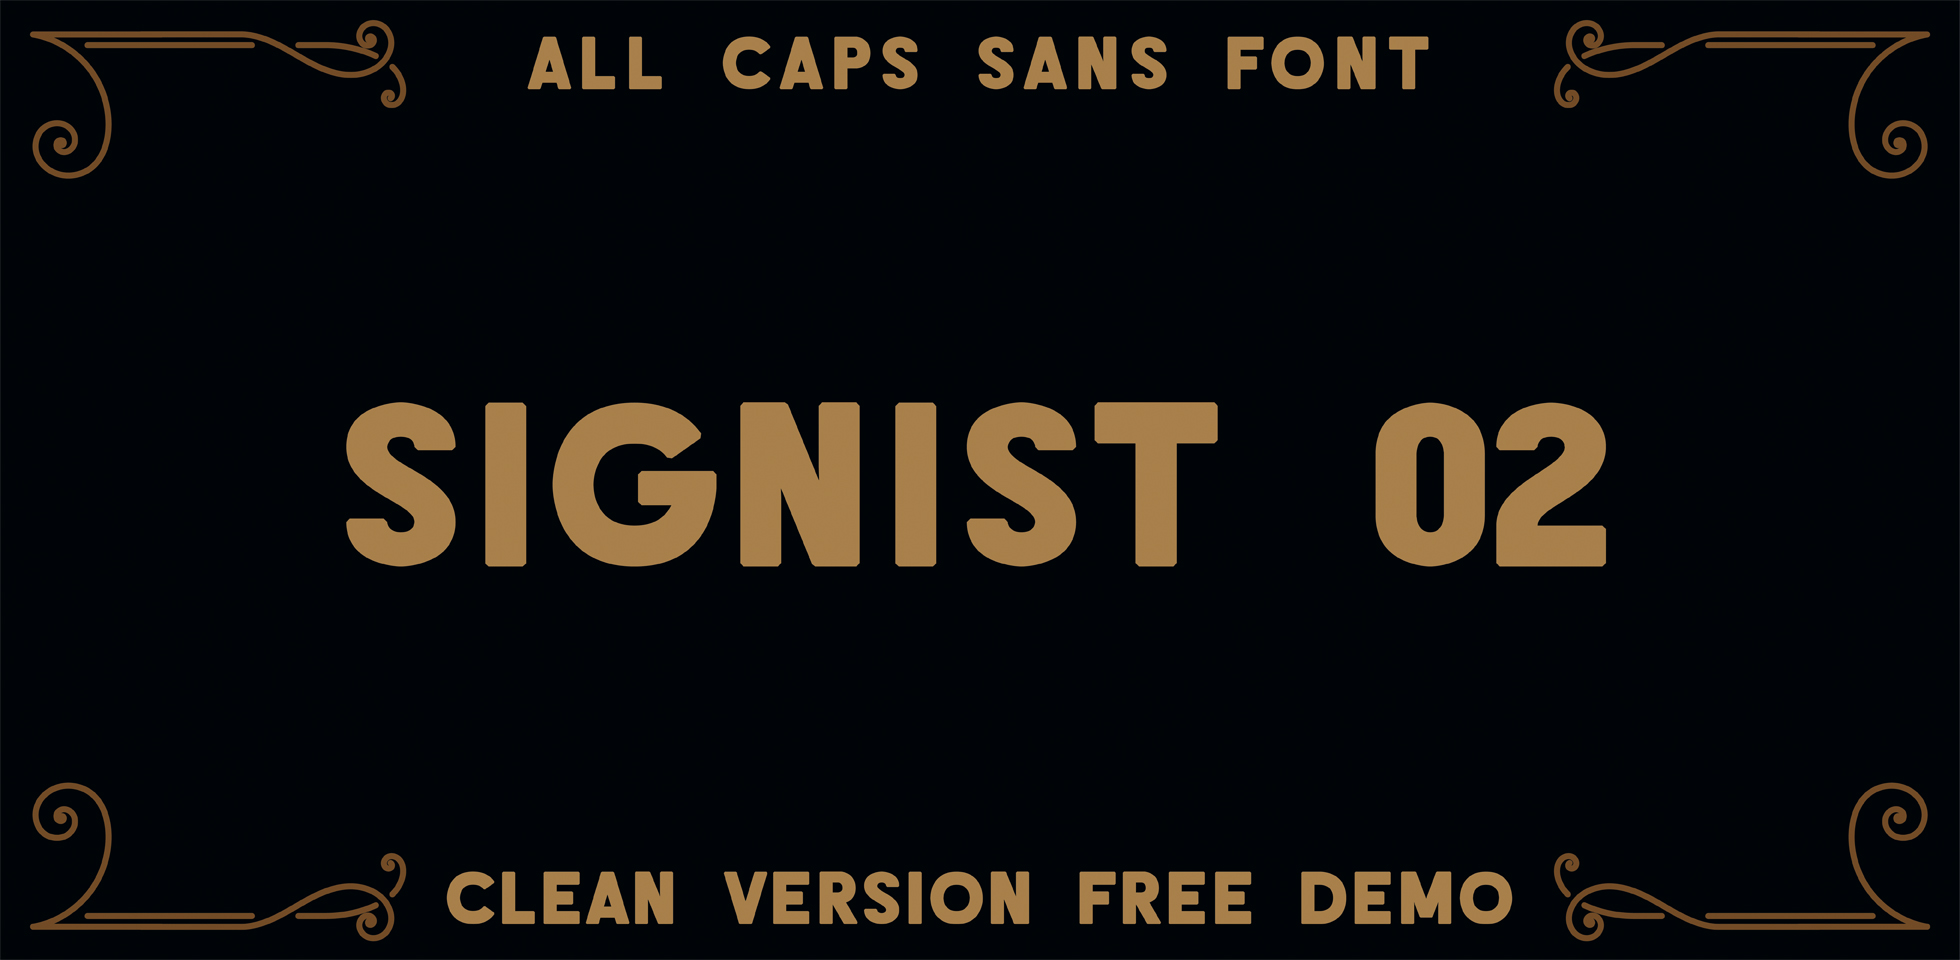 Free Download: Signist Font - Clean Version